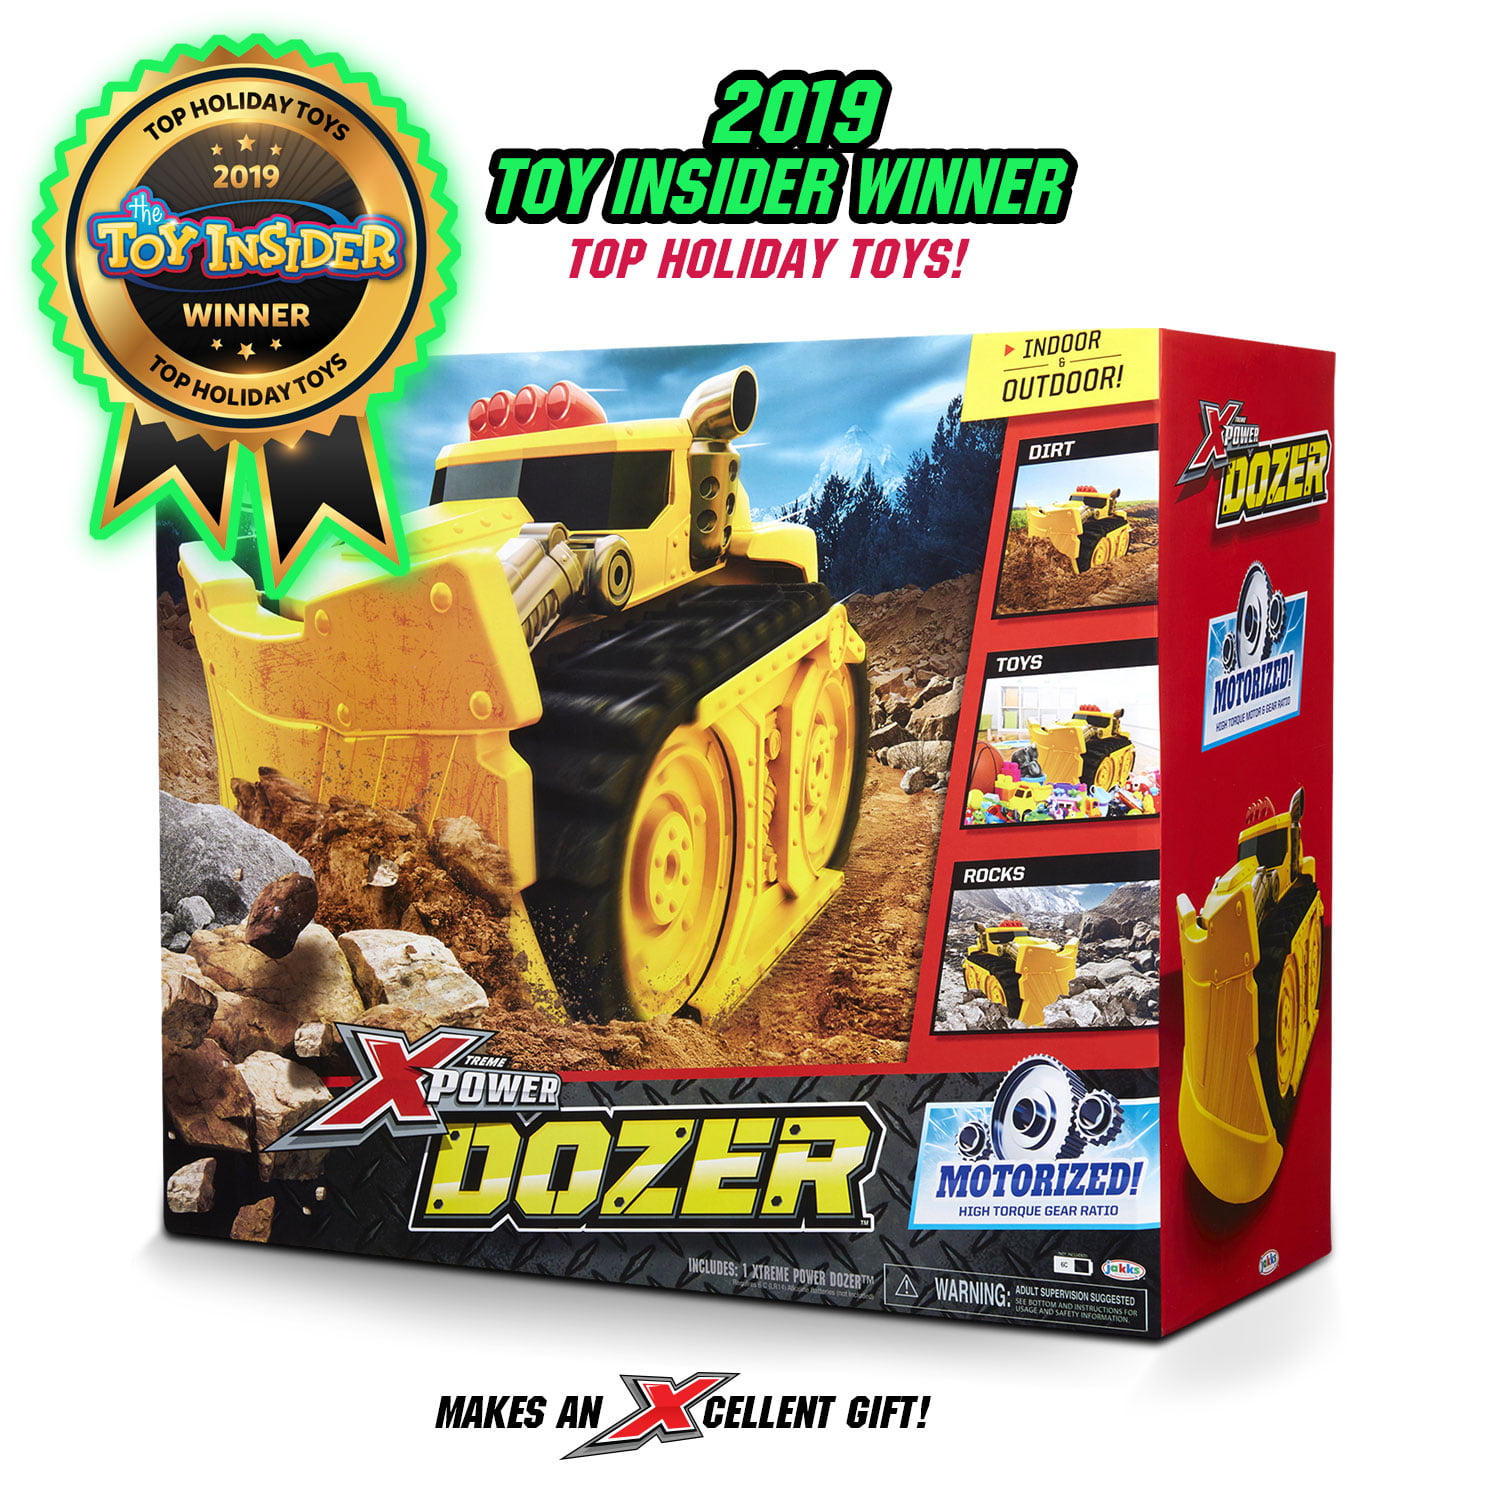 Xtreme Power Dozer Motorized Extreme Bull Dozer Toy Truck New! Bulldozer Toy 